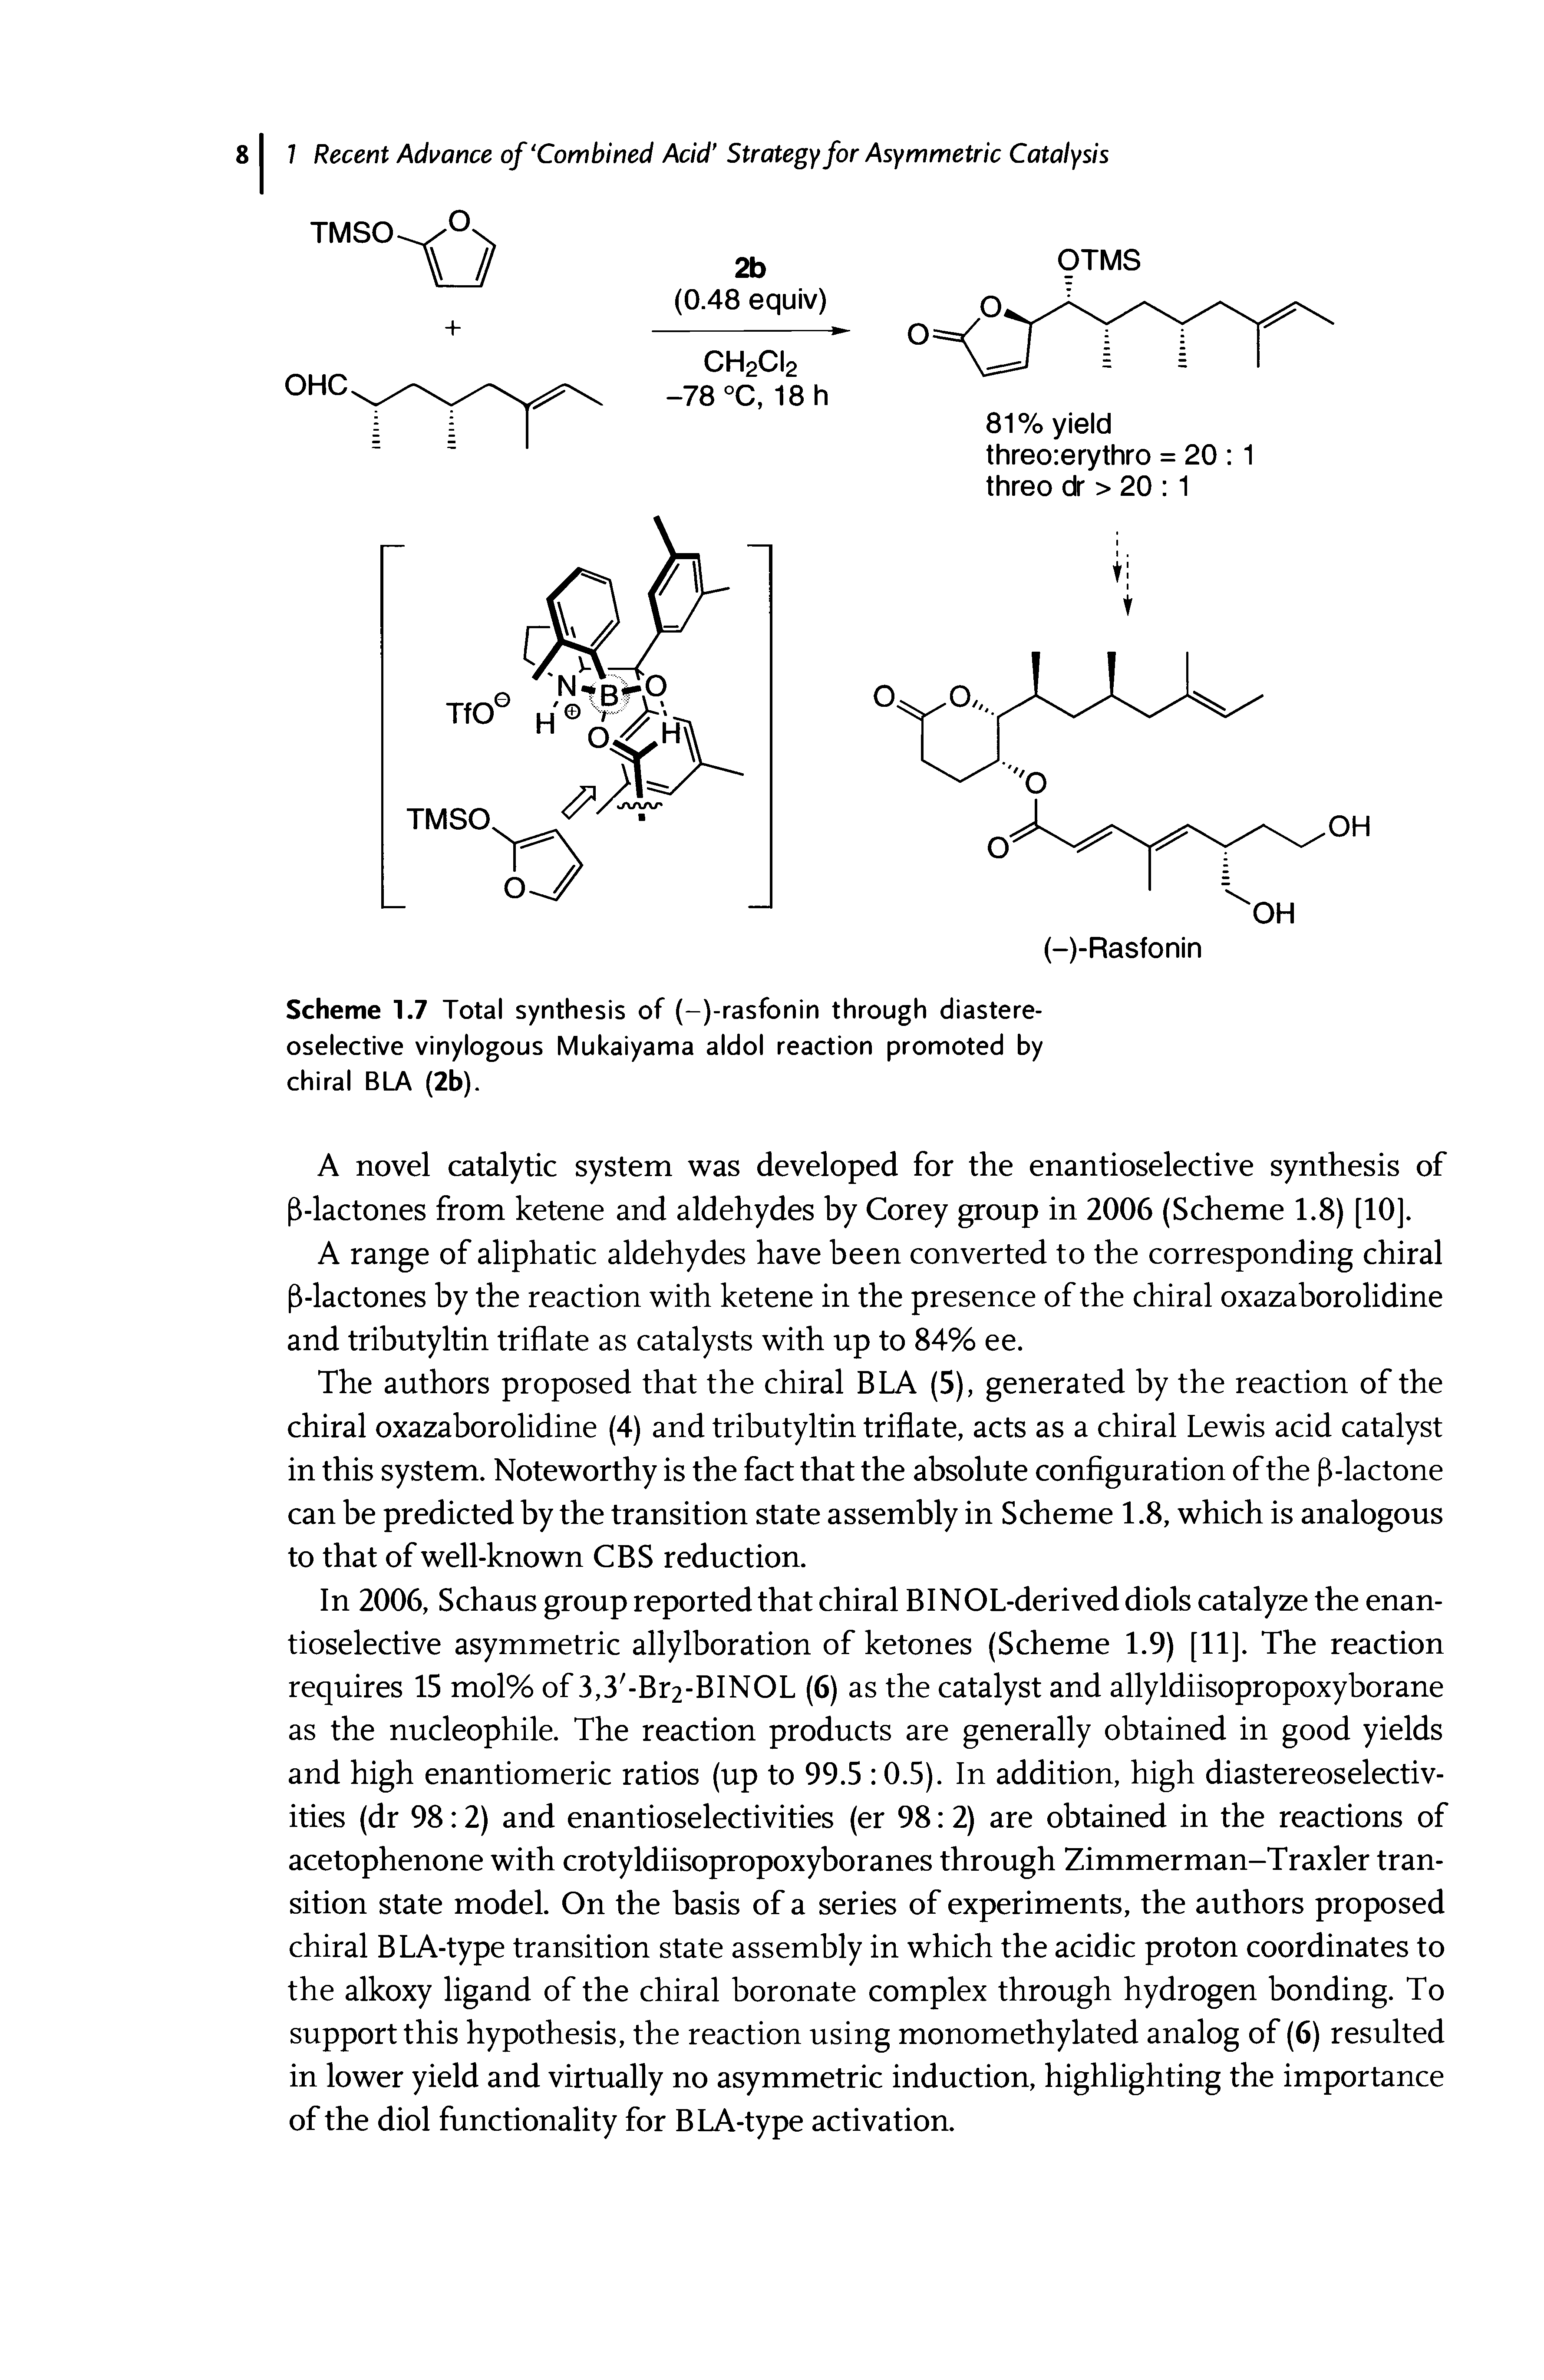 Scheme 1.7 Total synthesis of (-)-rasfonin through diastere-oselective vinylogous Mukaiyama aldol reaction promoted by chiral BLA (2b).